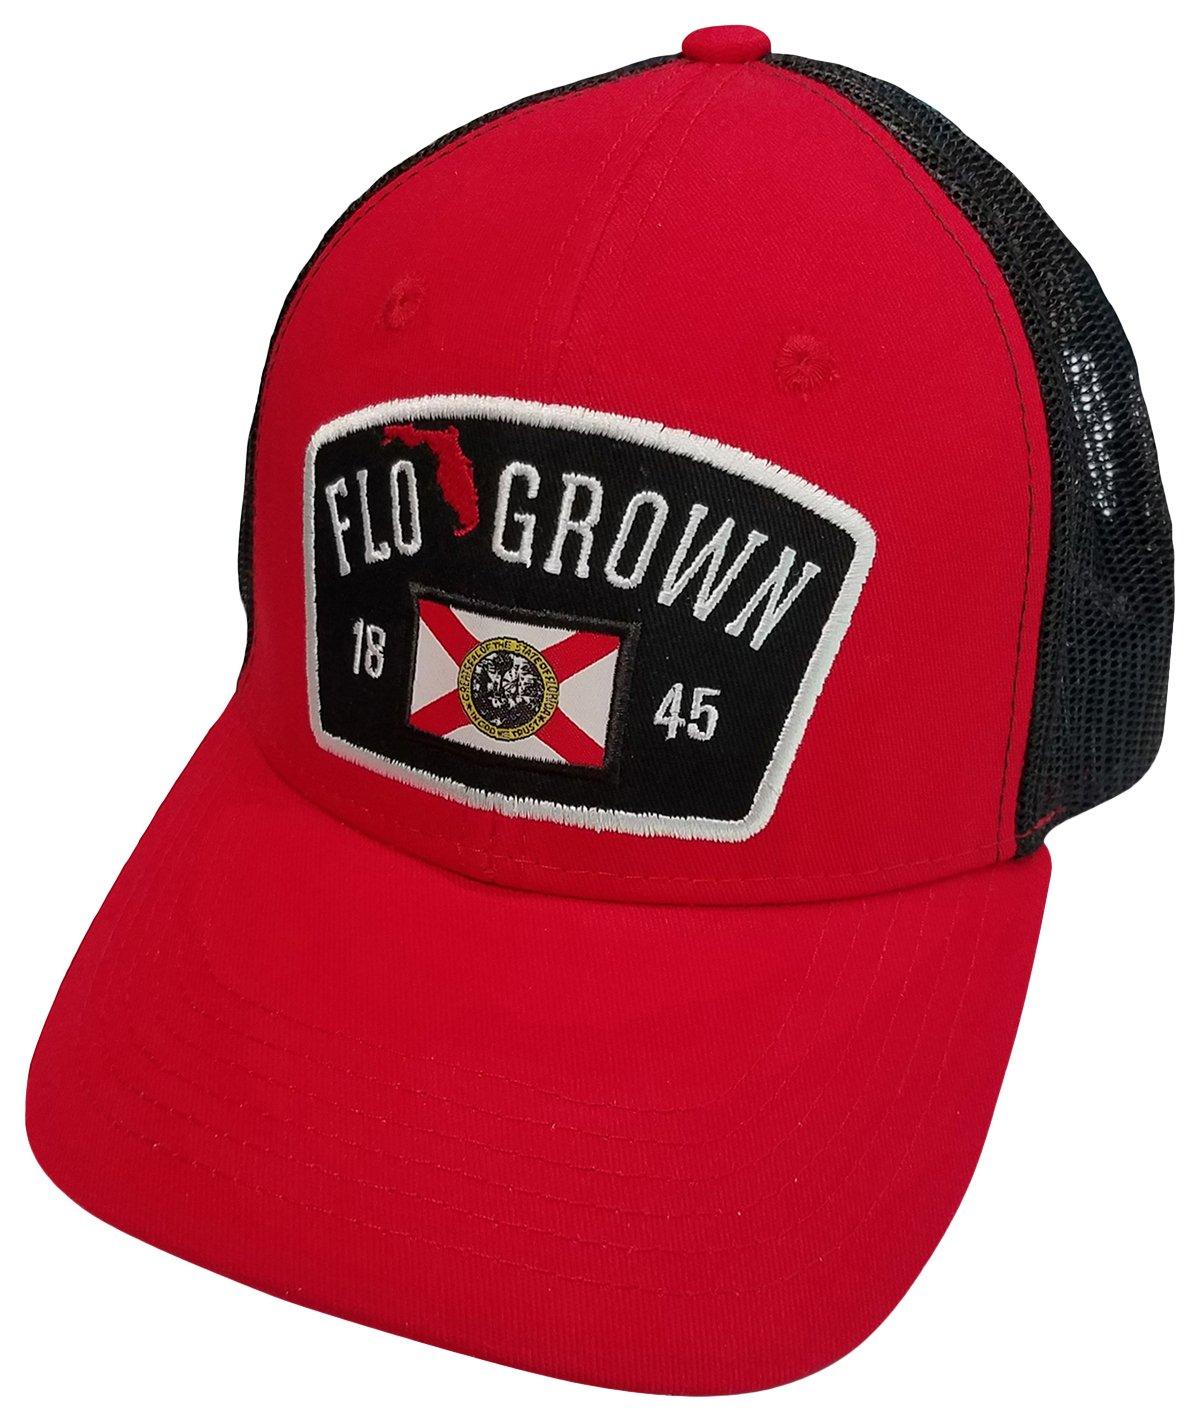 FloGrown Mens Jumbo Crest Patch Snapback Hat